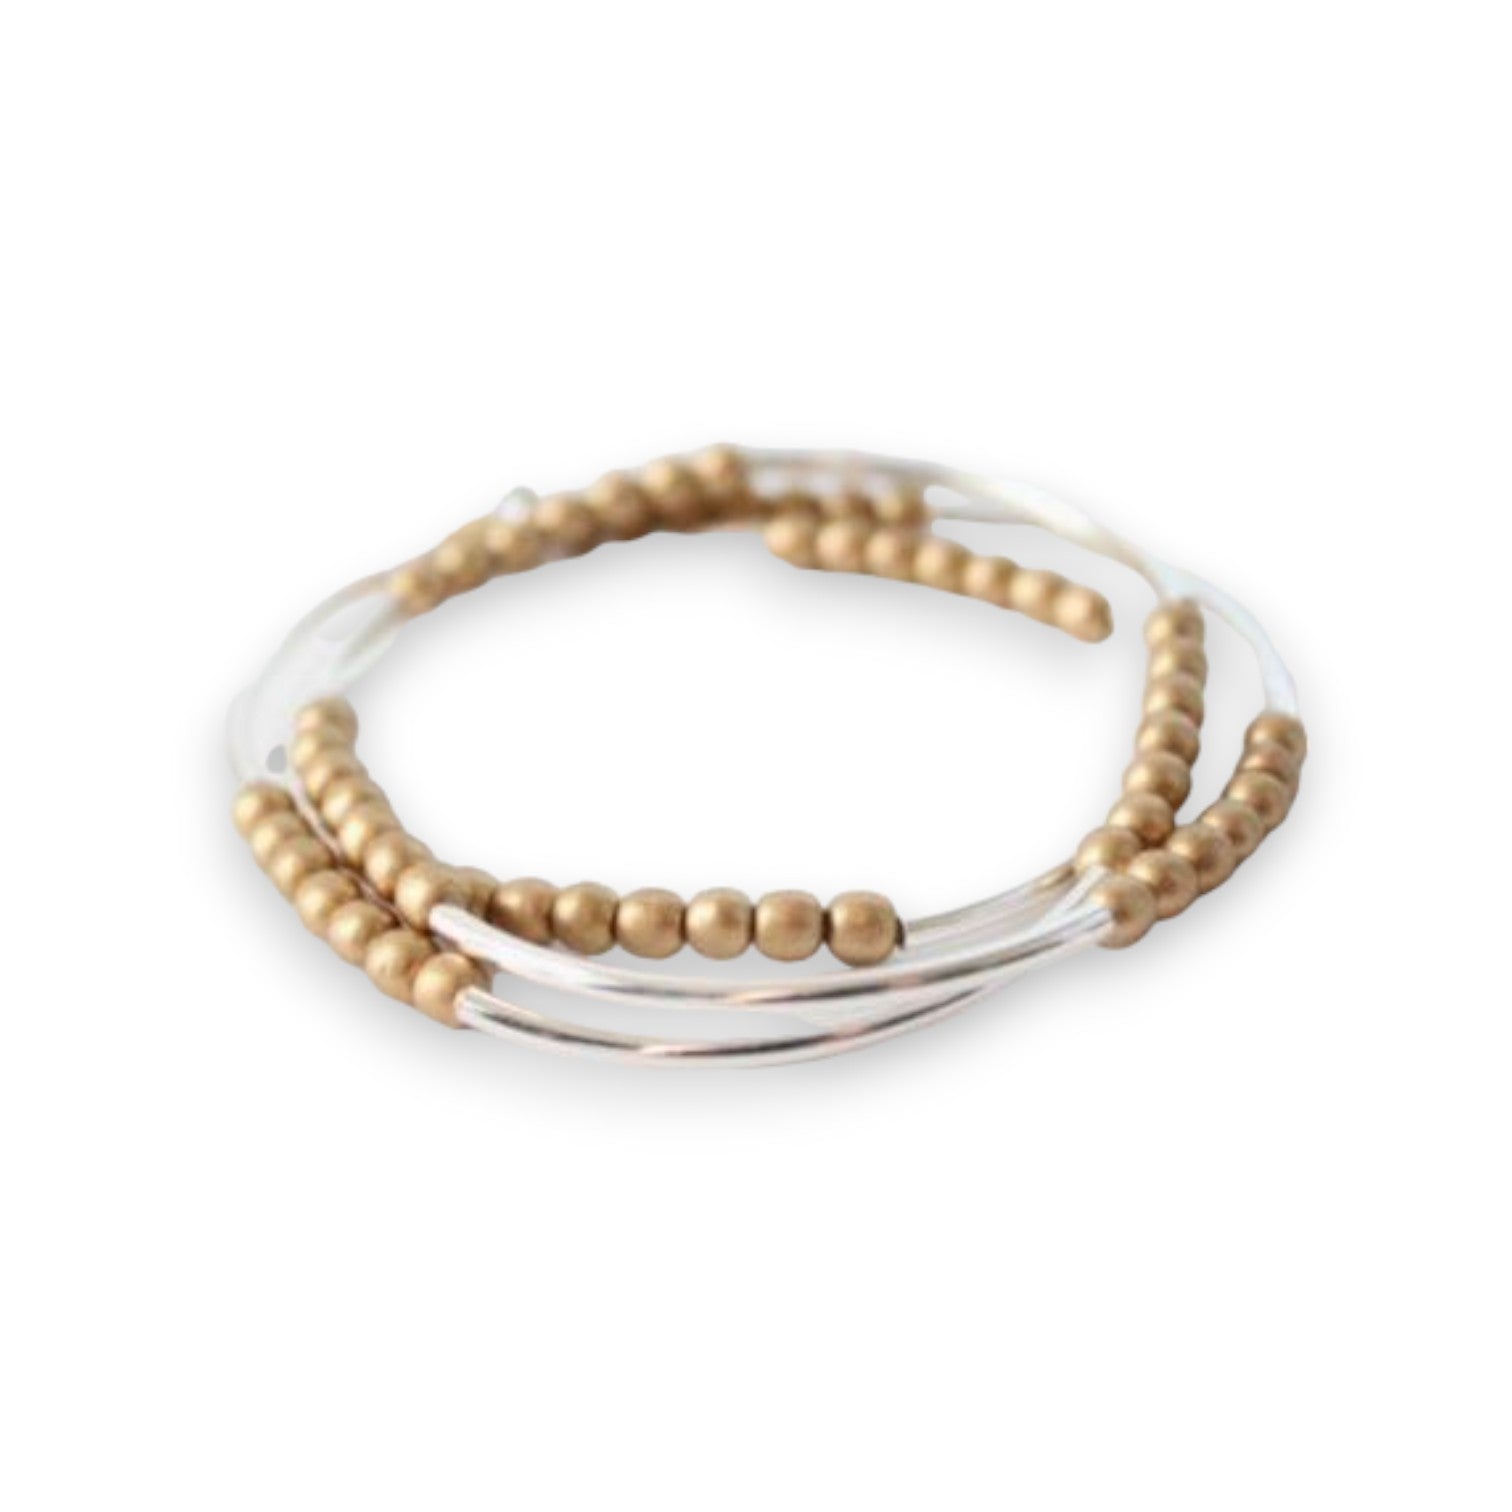 Triple Wrap Bracelet - Silver Tube and Gold Round Beads - Mellow Monkey